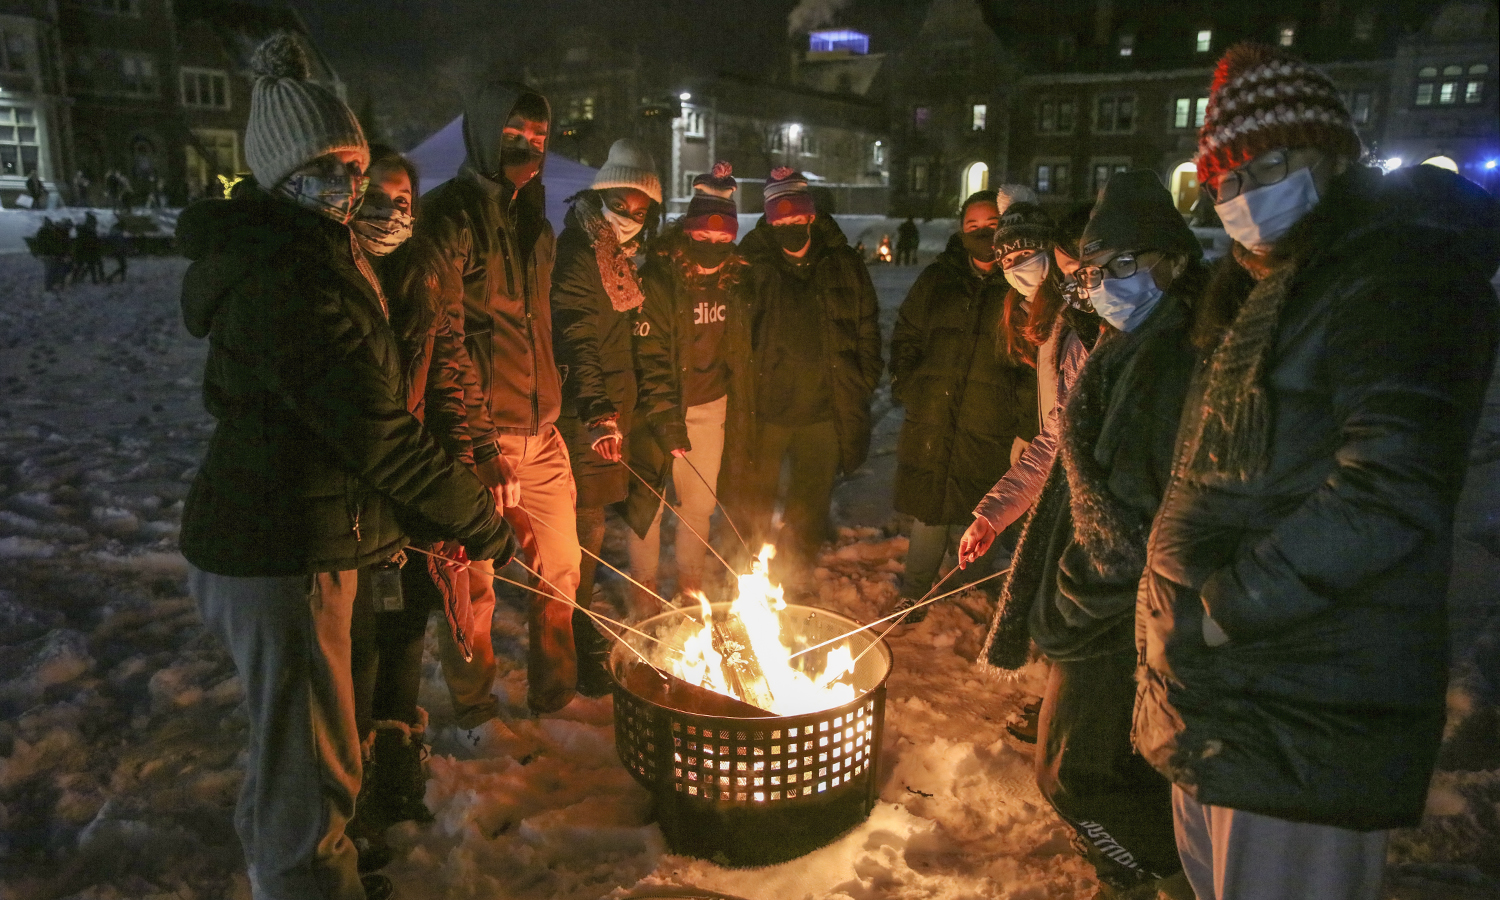 Students gather around a bonfire